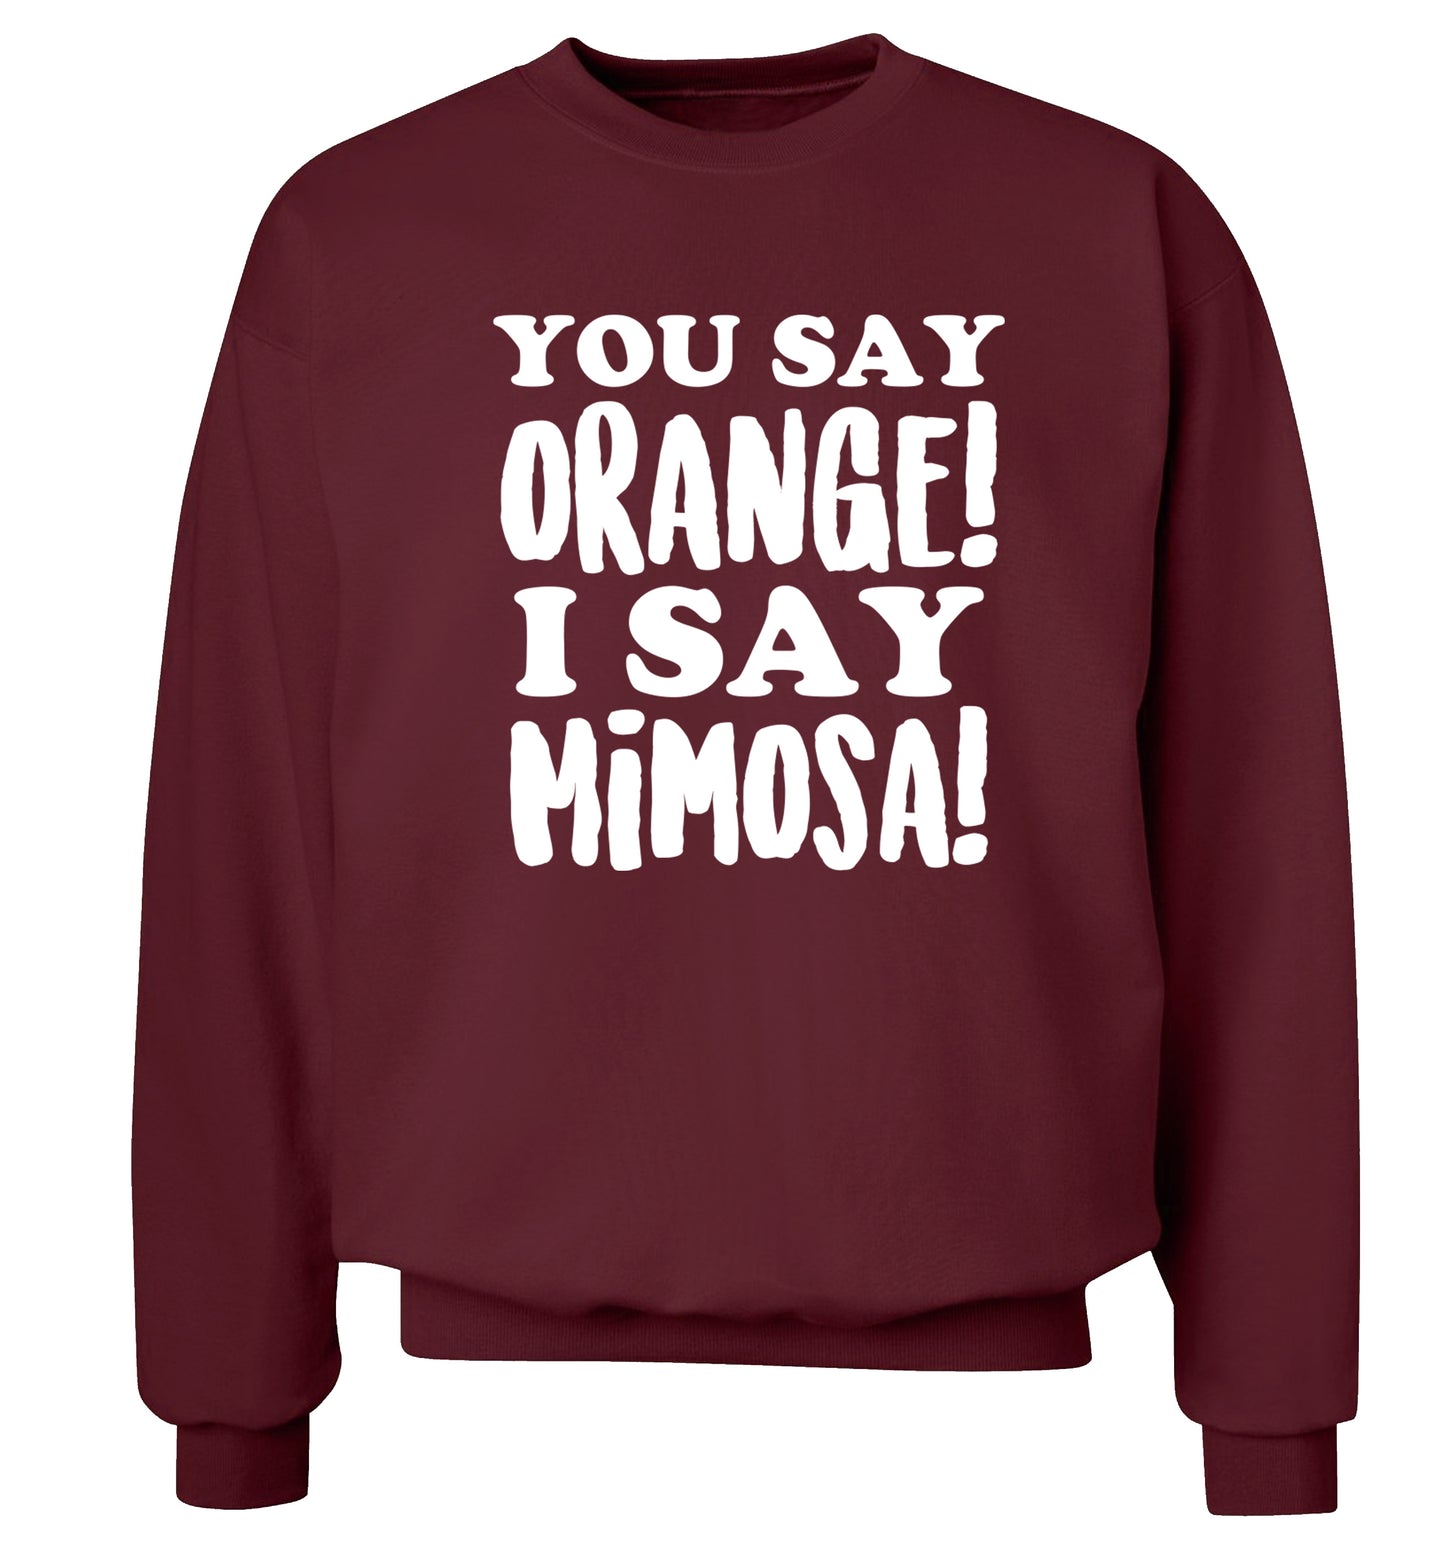 You say orange I say mimosa! Adult's unisex maroon Sweater 2XL